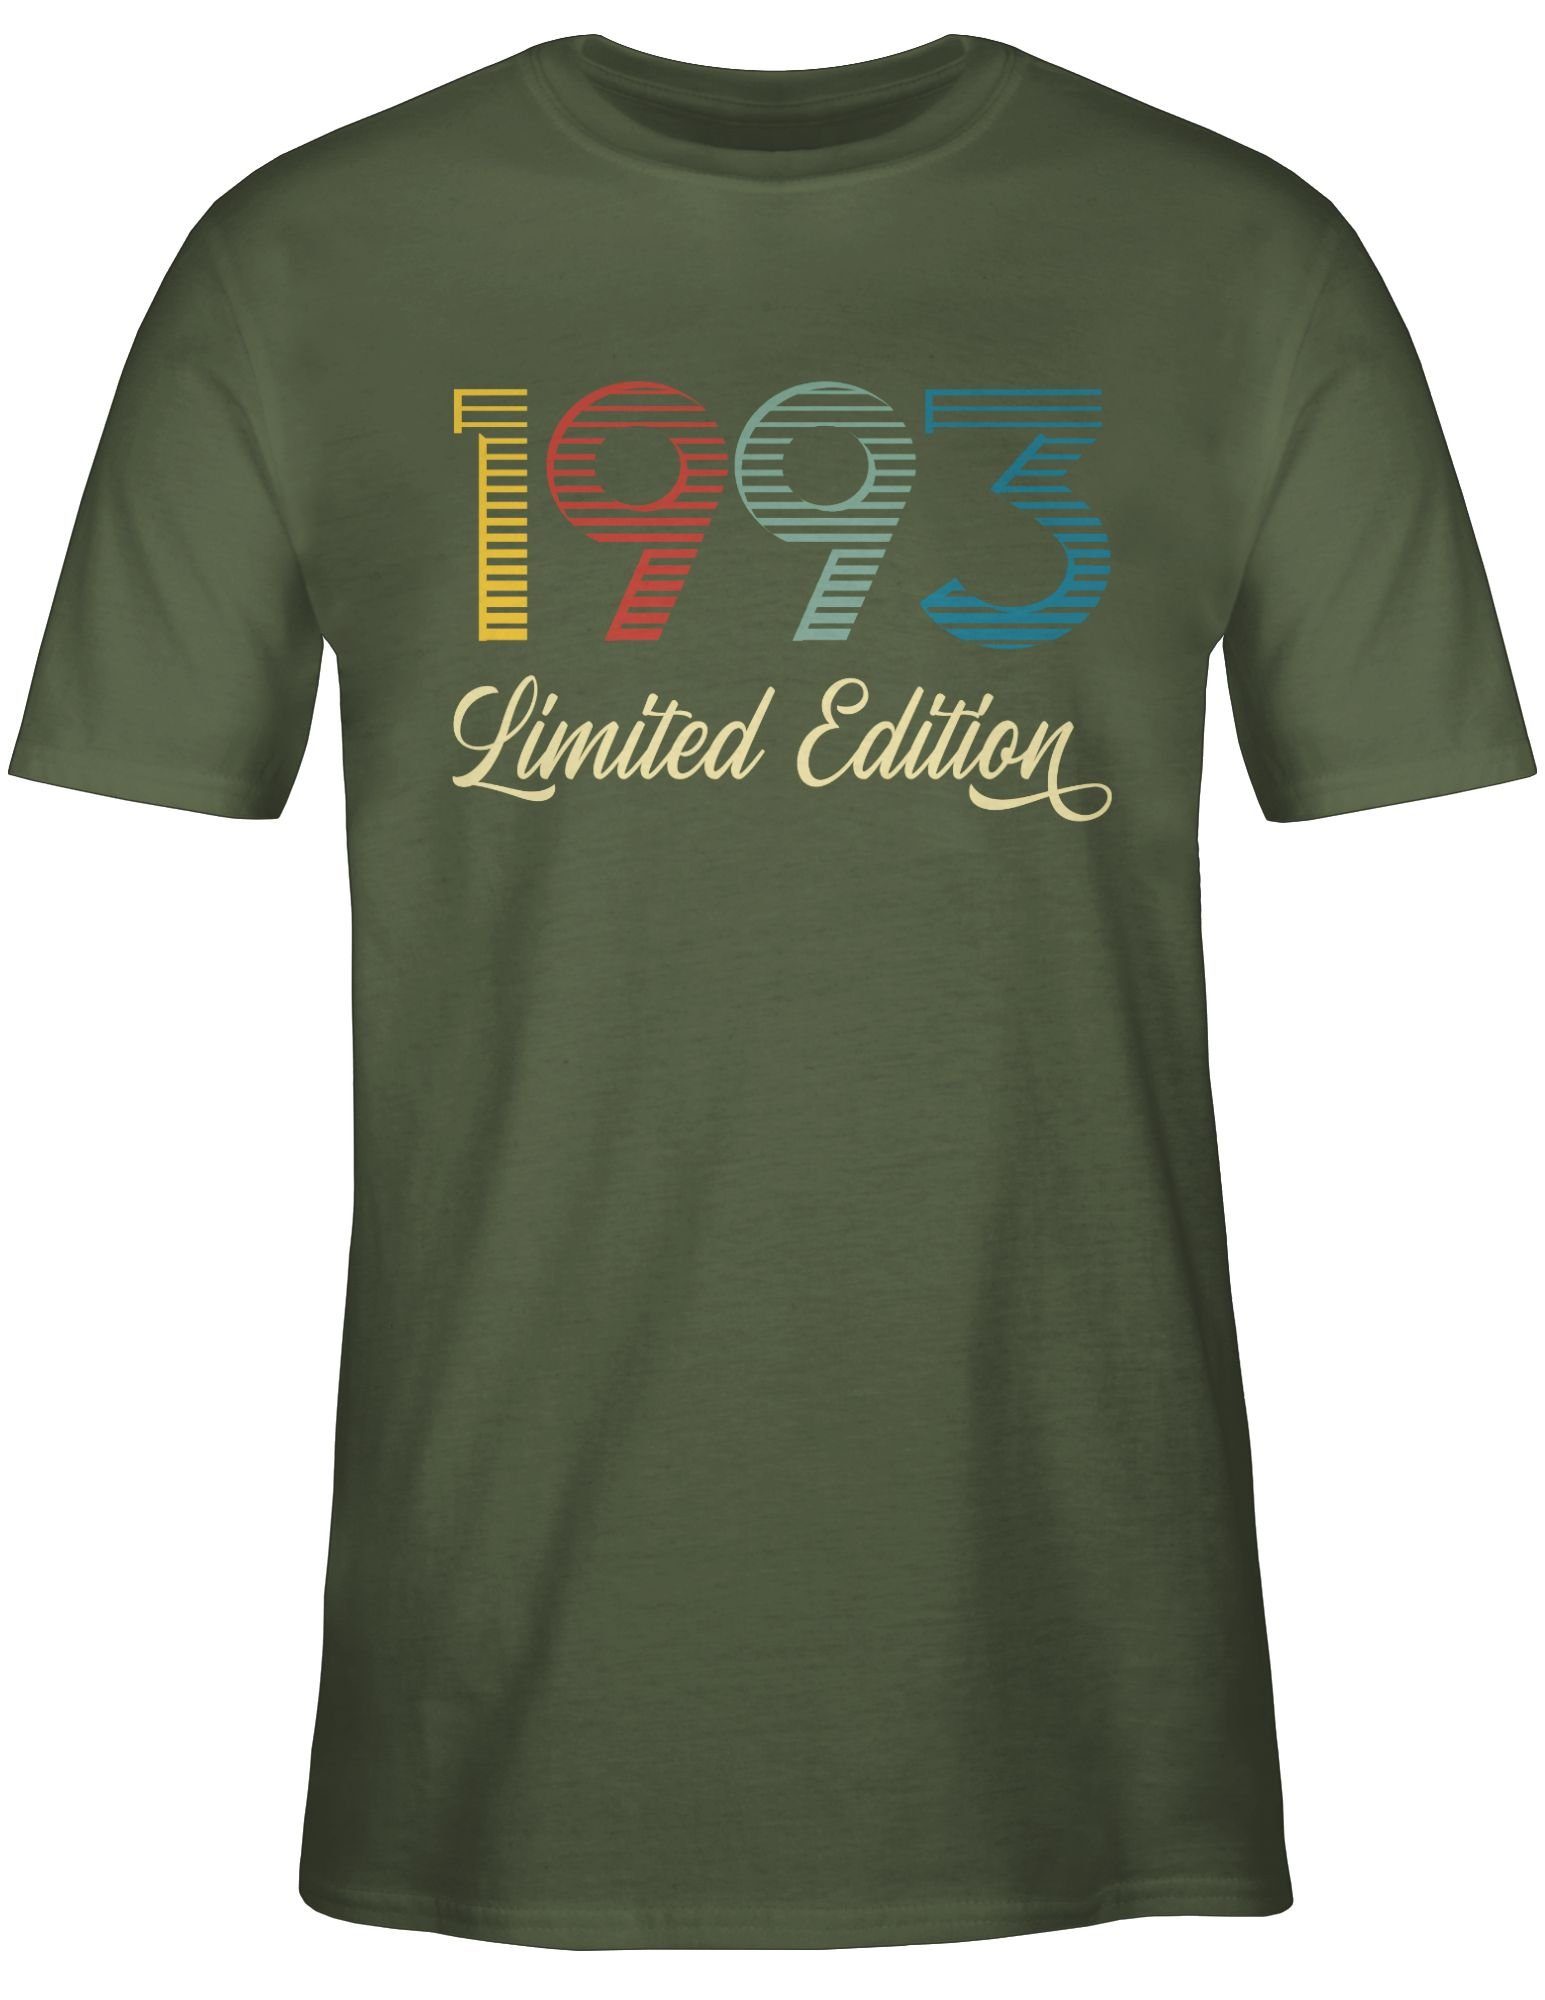 Dreißigster Limited Shirtracer Geburtstag T-Shirt Grün Edition Army 30. 3 1993